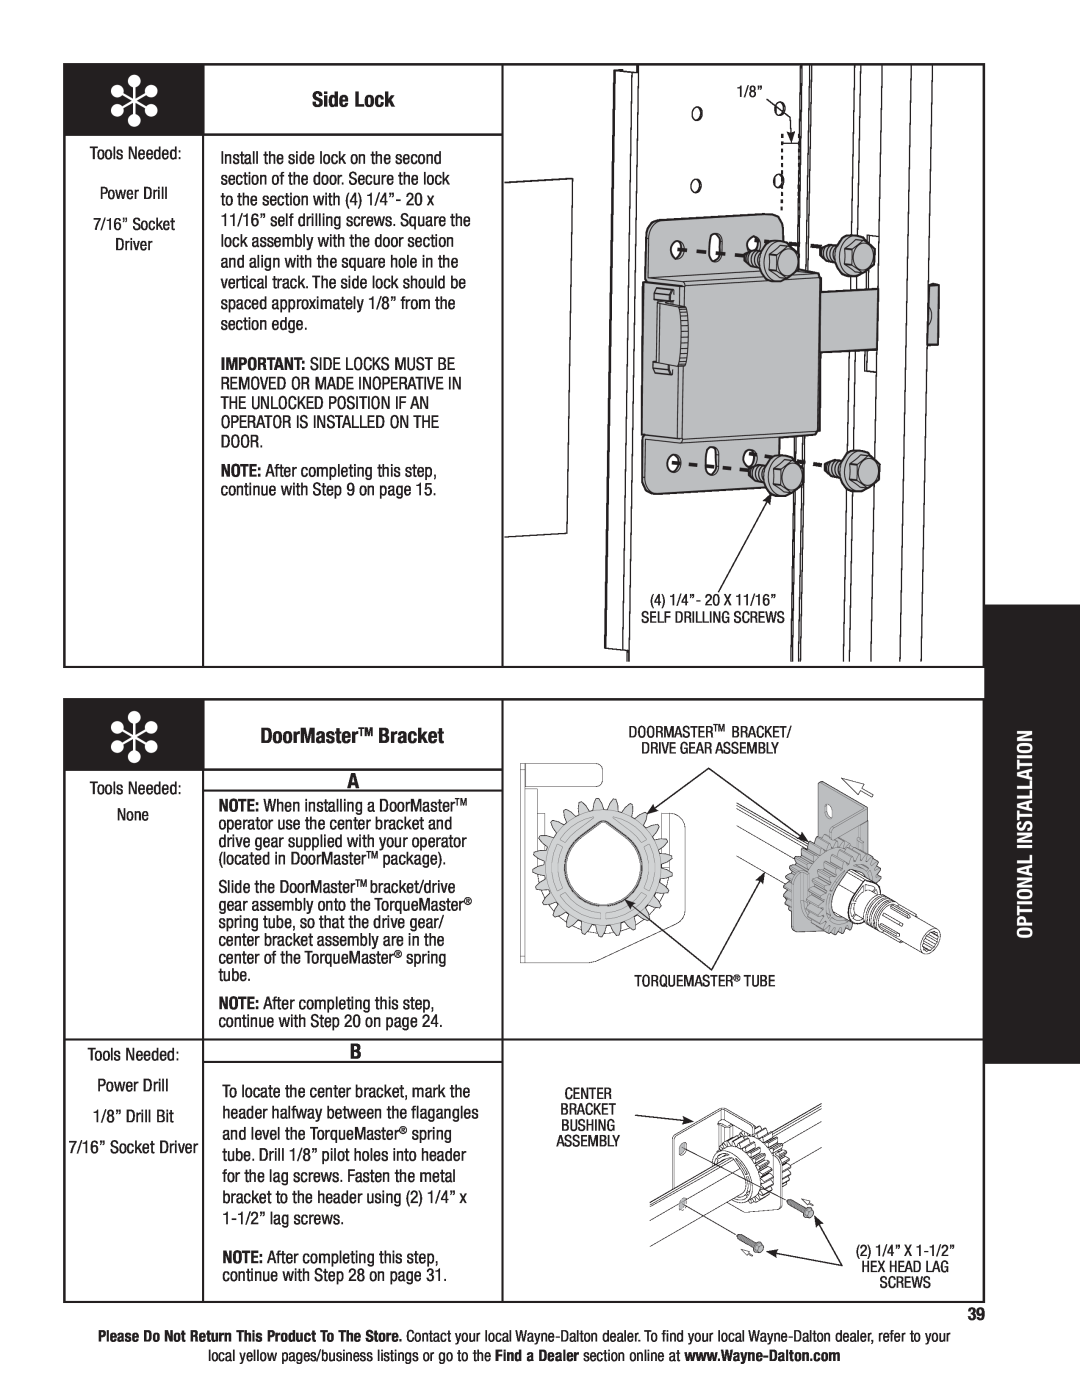 Wayne-Dalton AND 9600, 9400 installation instructions Side Lock, DoorMaster TM Bracket, optional INSTALLATION 